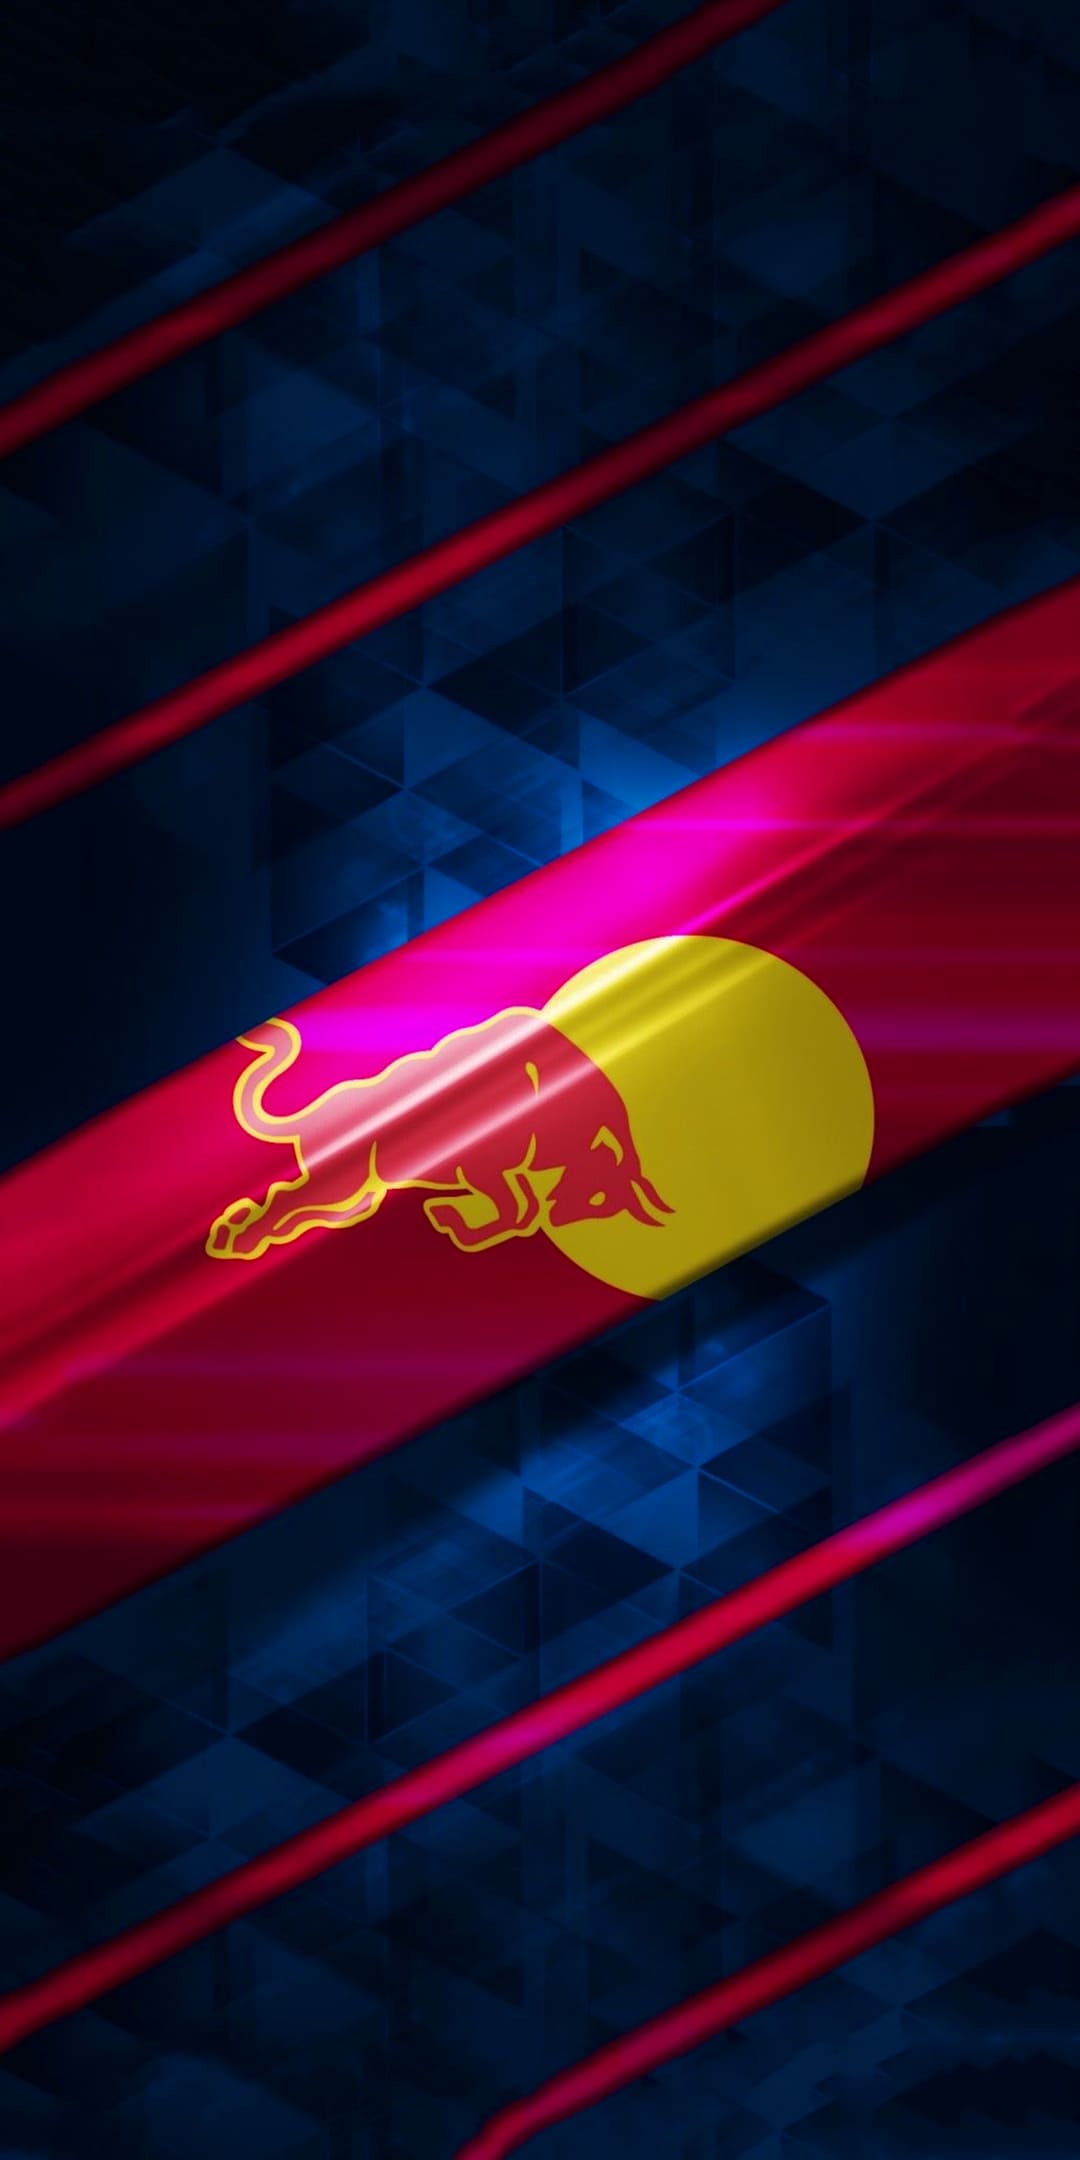 Red bull mobile. Red bull Racing logo 2022. Обои Red bull Racing iphone. F1 логотип ред Булл. Red bull f1 logo 2022.